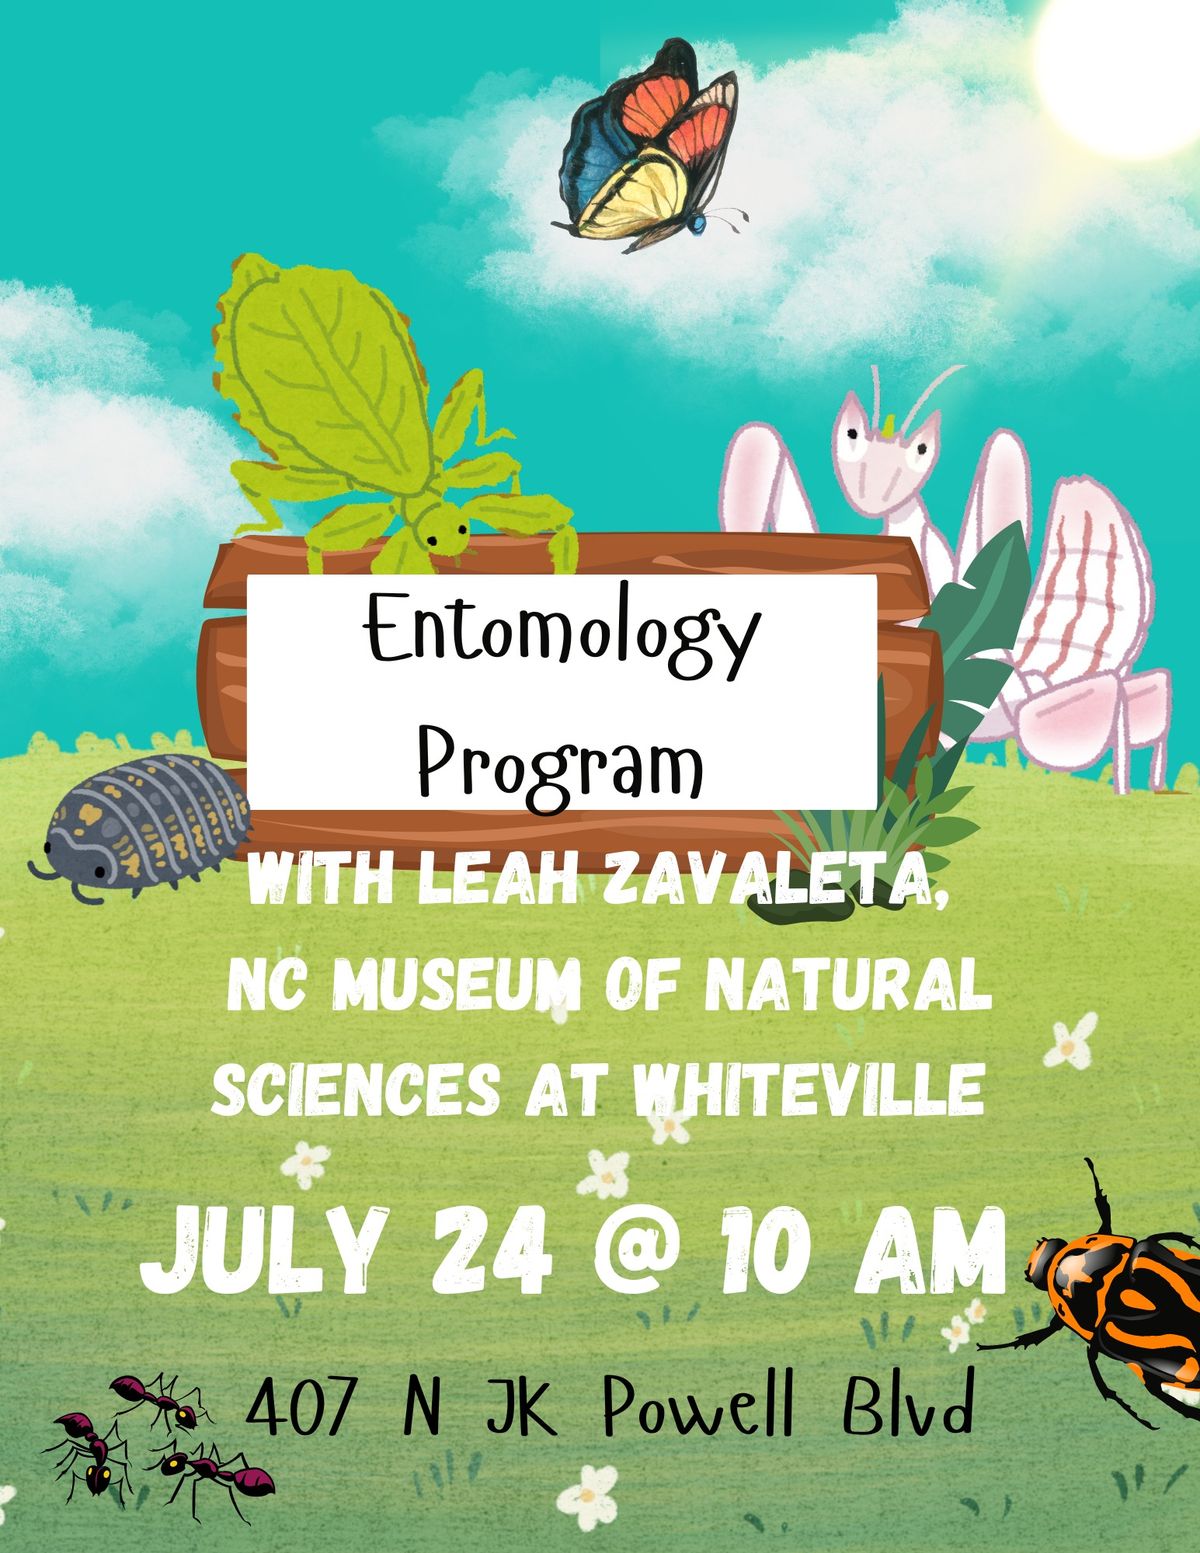 Entomology Program with Leah Zavaleta